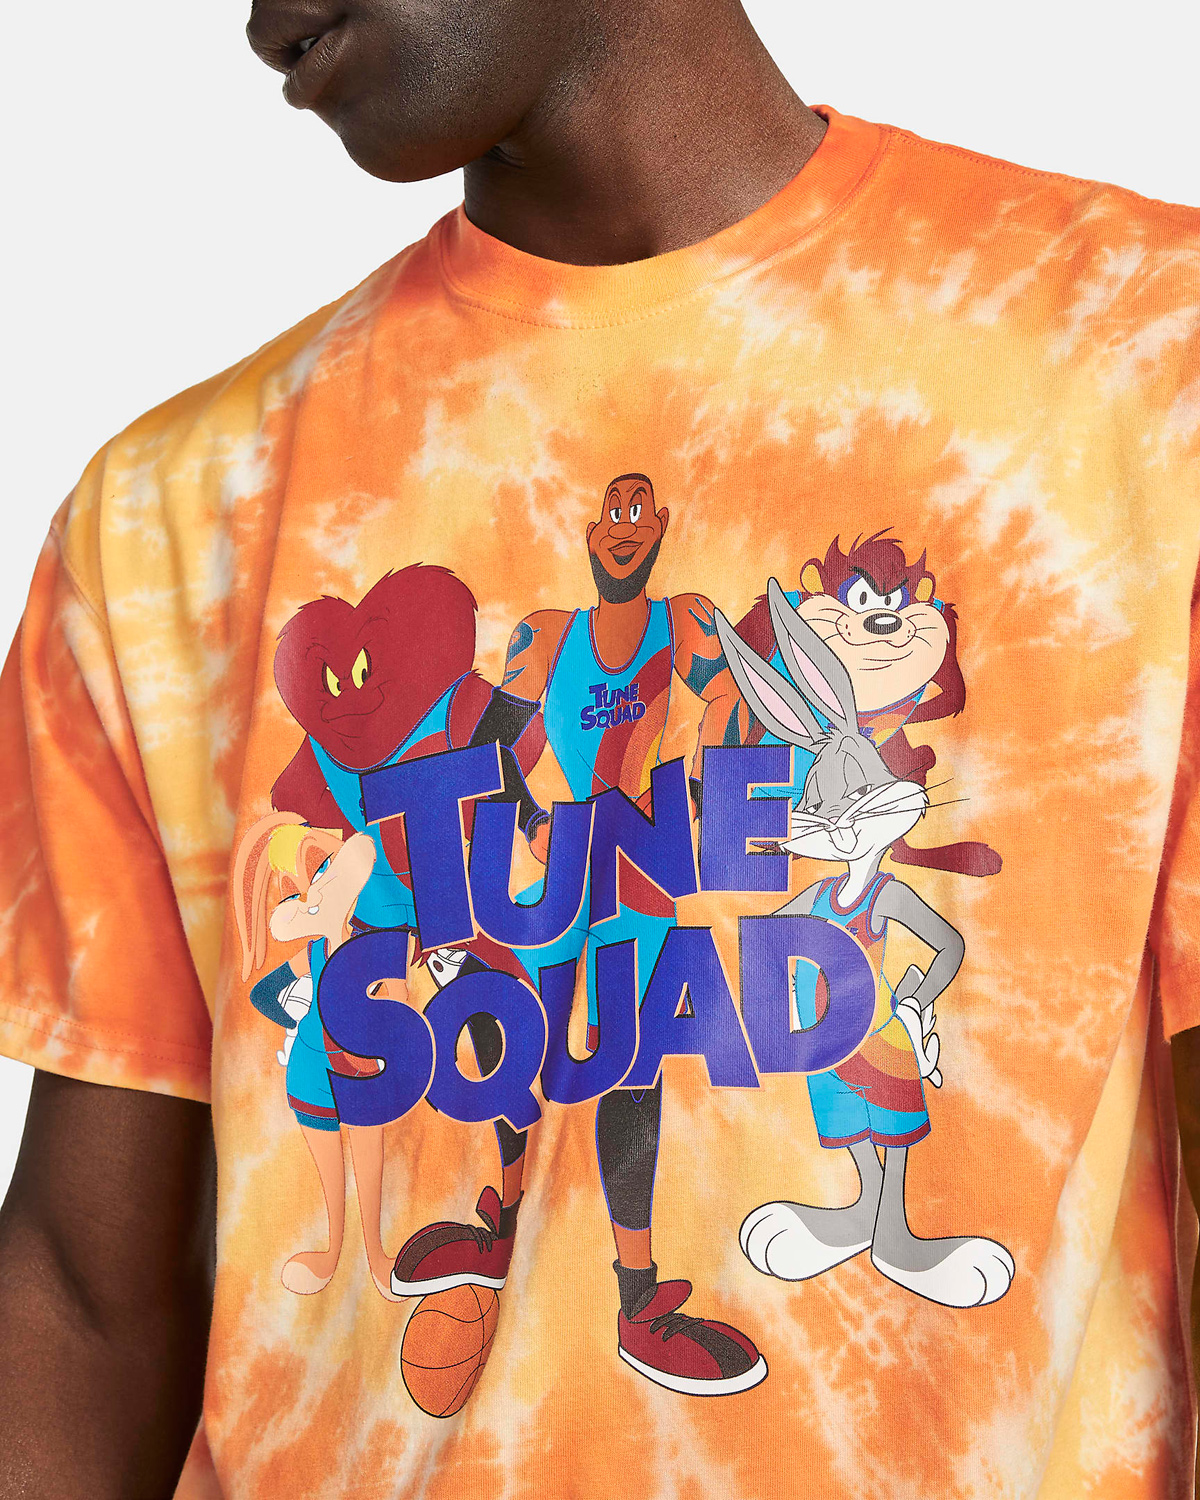 nike space jam new legacy tune squad tie dye shirt orange 2